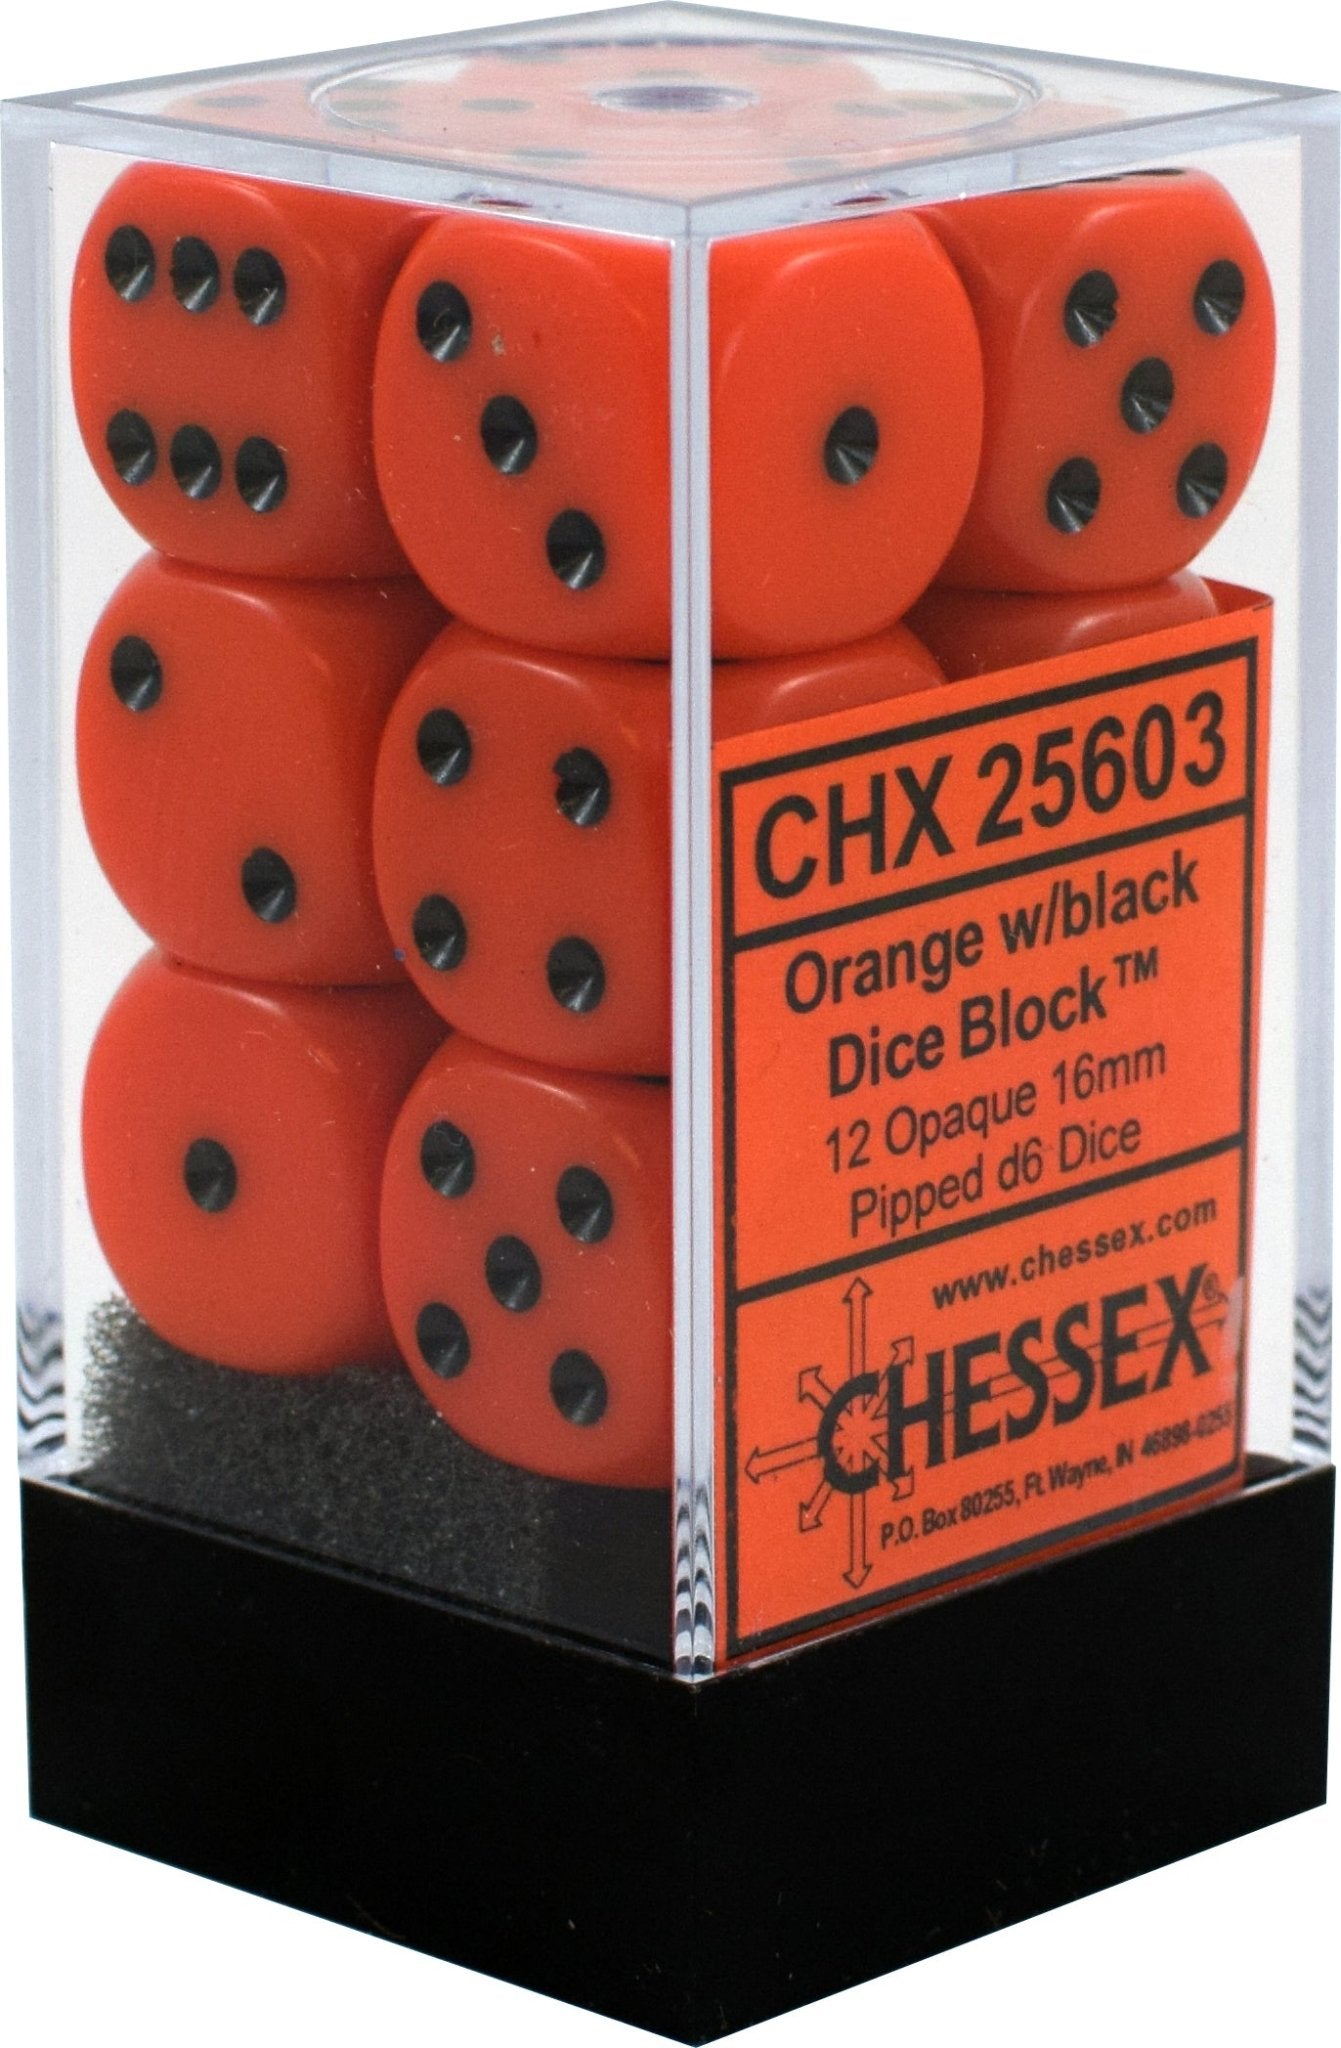 Chessex Dice: D6 Block 16mm - Opaque - Orange with Black (CHX 25603) - Gamescape